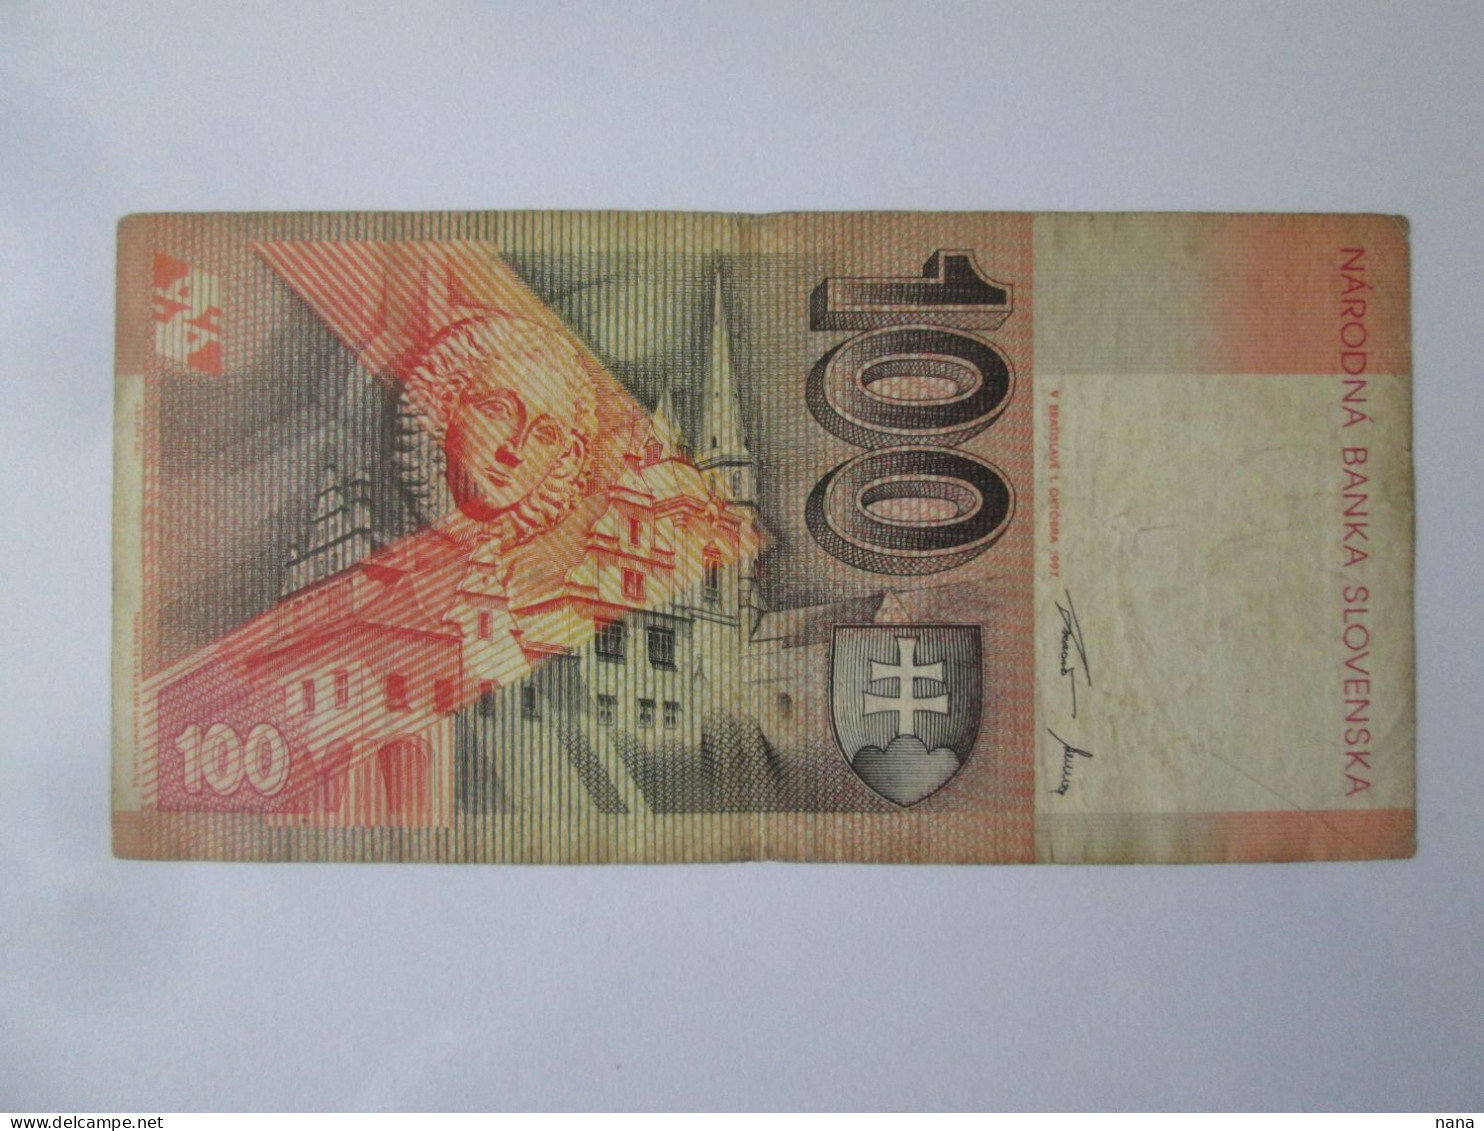 Rare Year! Slovakia 100 Korun 1997 Banknote See Pictures - Slowakei